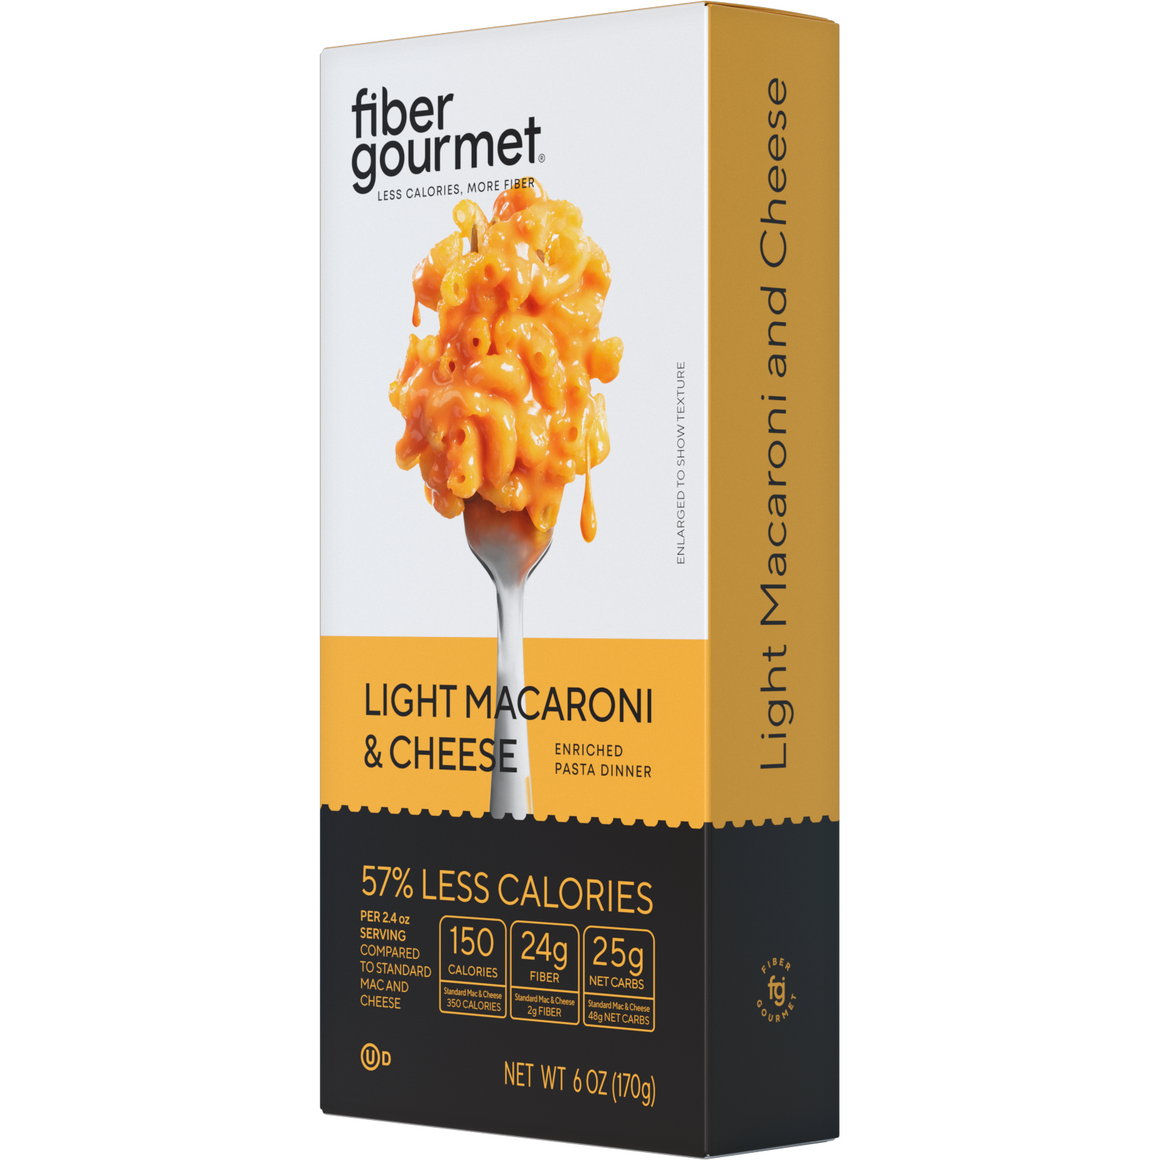 Fiber Gourmet - High Fiber Light Macaroni & Cheese Dinner - 7.25 oz